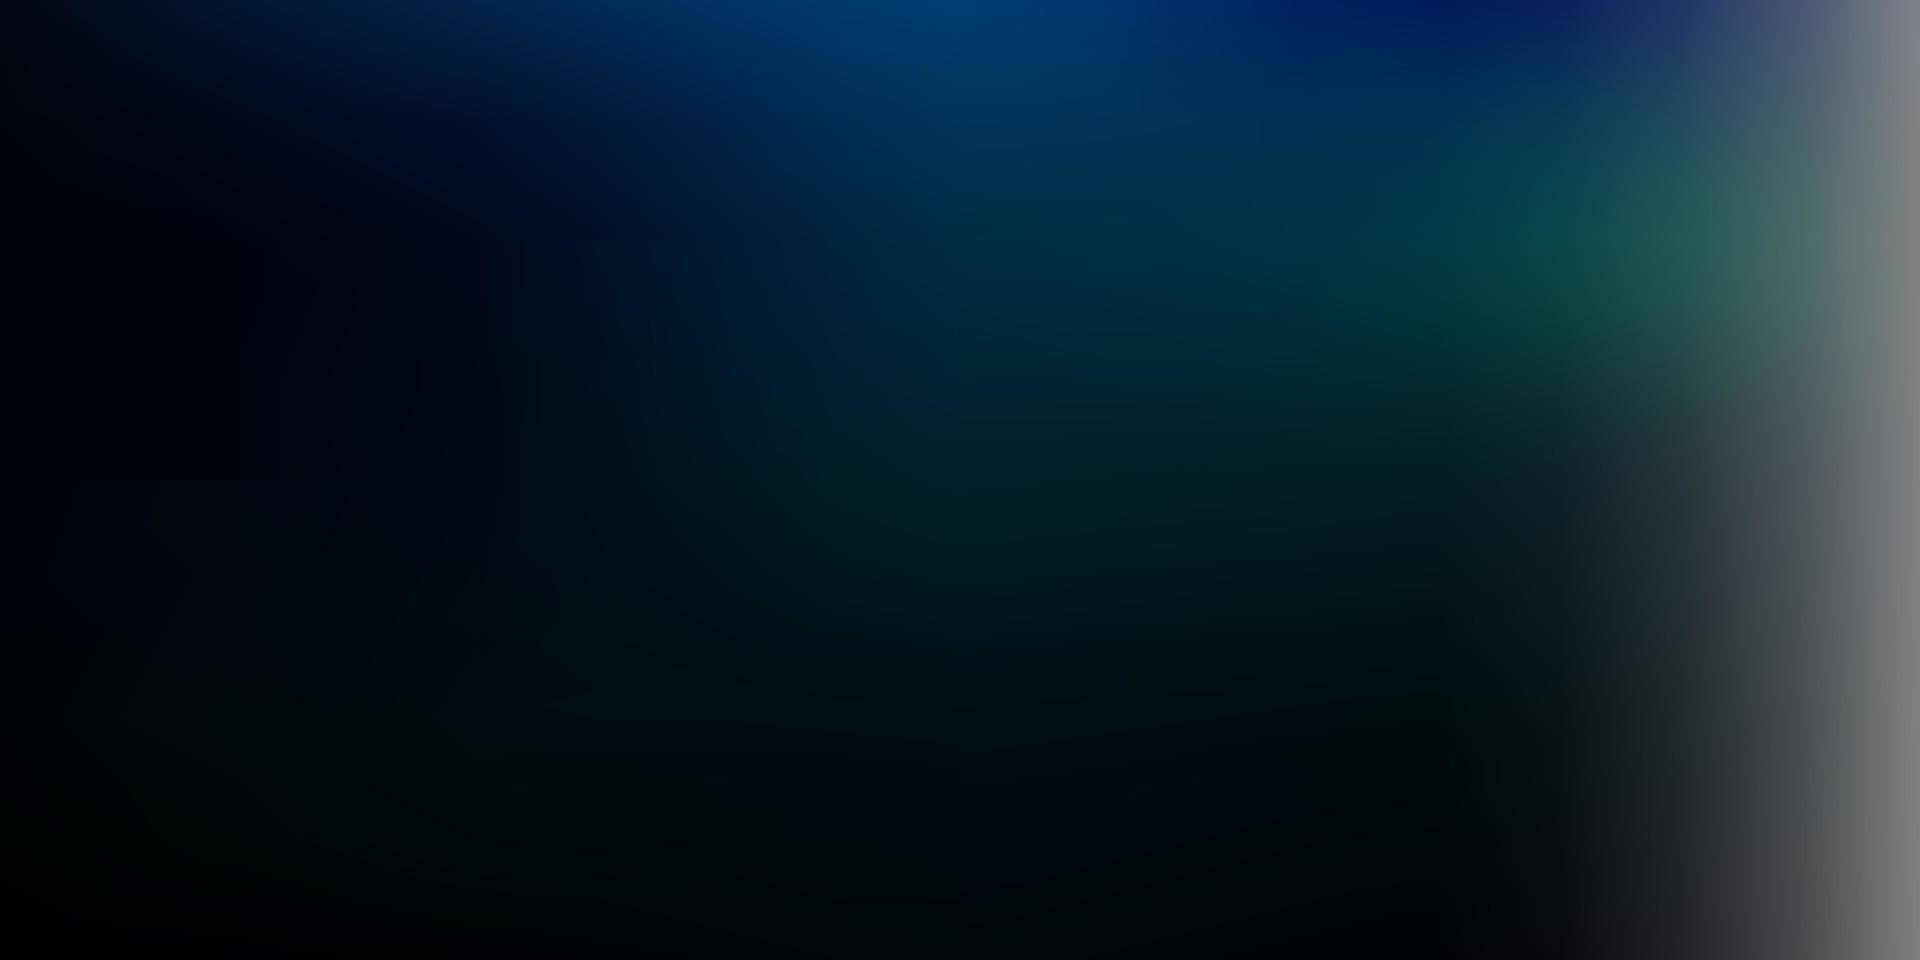 Dark blue vector abstract blur template.